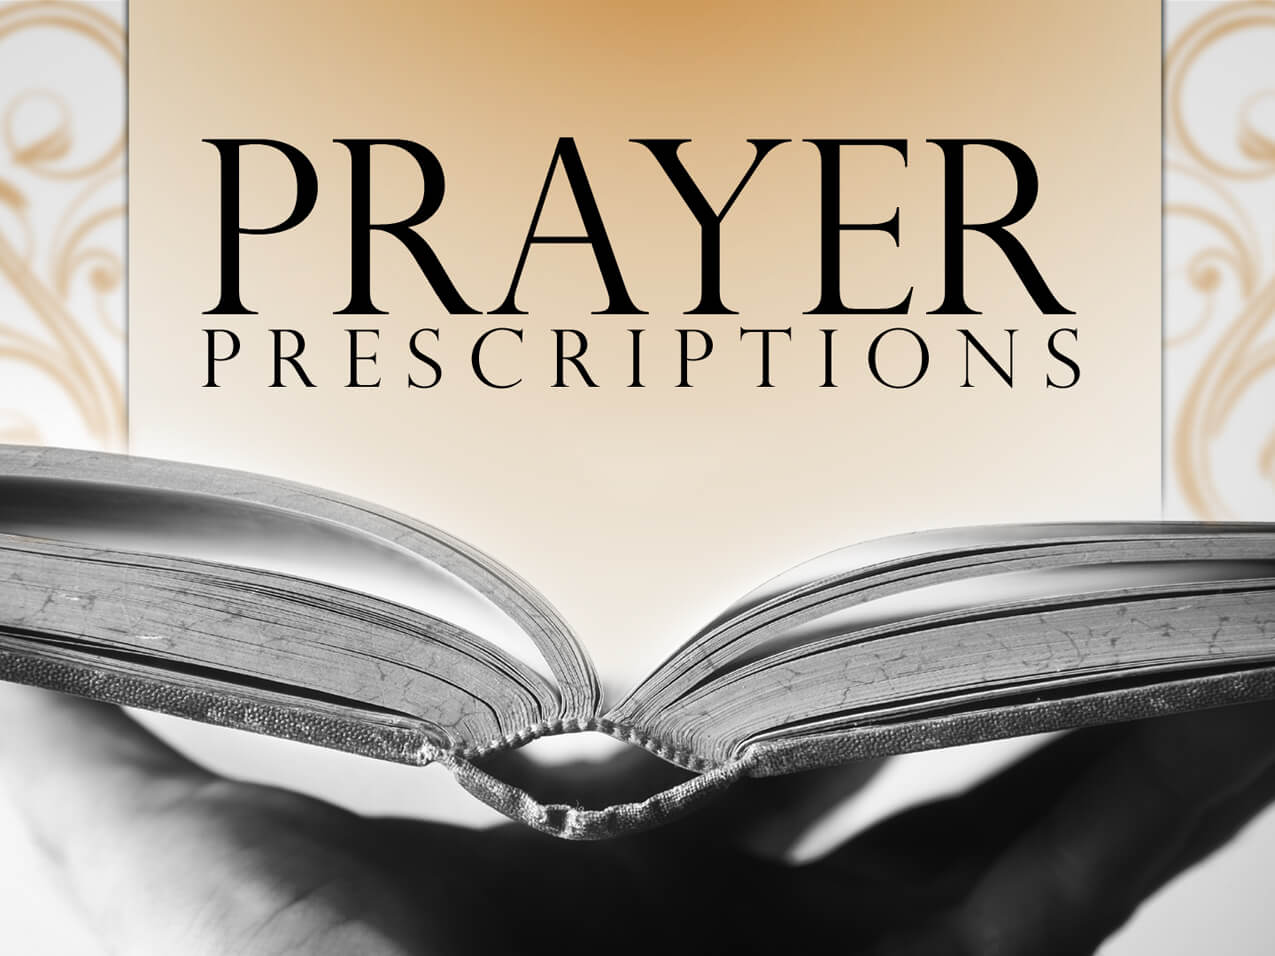 Prescription Prayers for the End Times